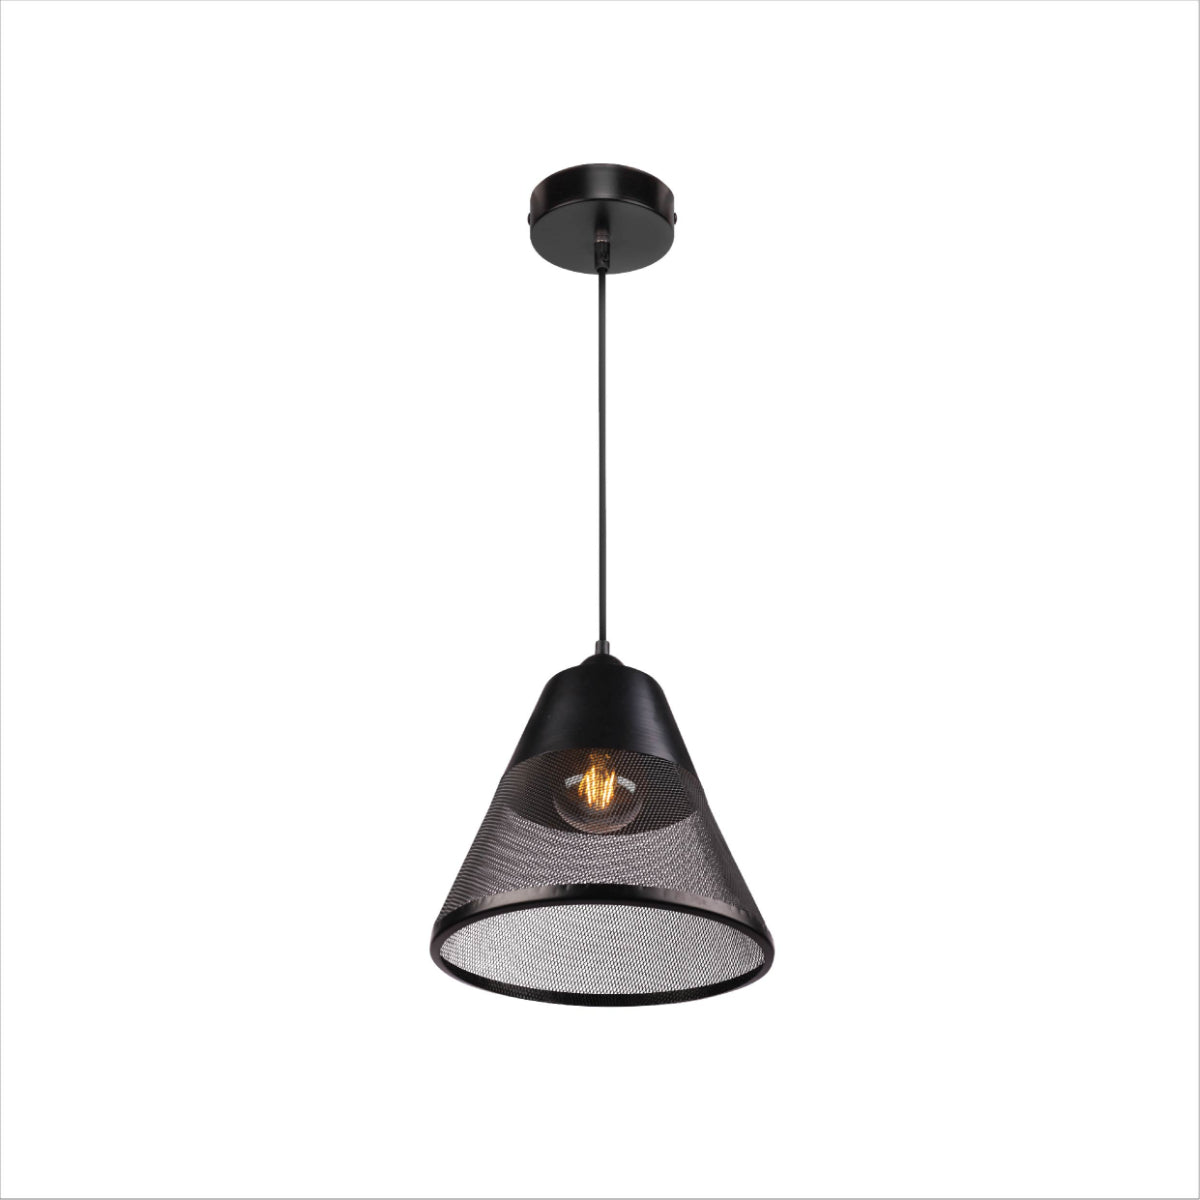 Main image of Black Metal Funnel Pendant Ceiling Light with E27 | TEKLED 150-18063